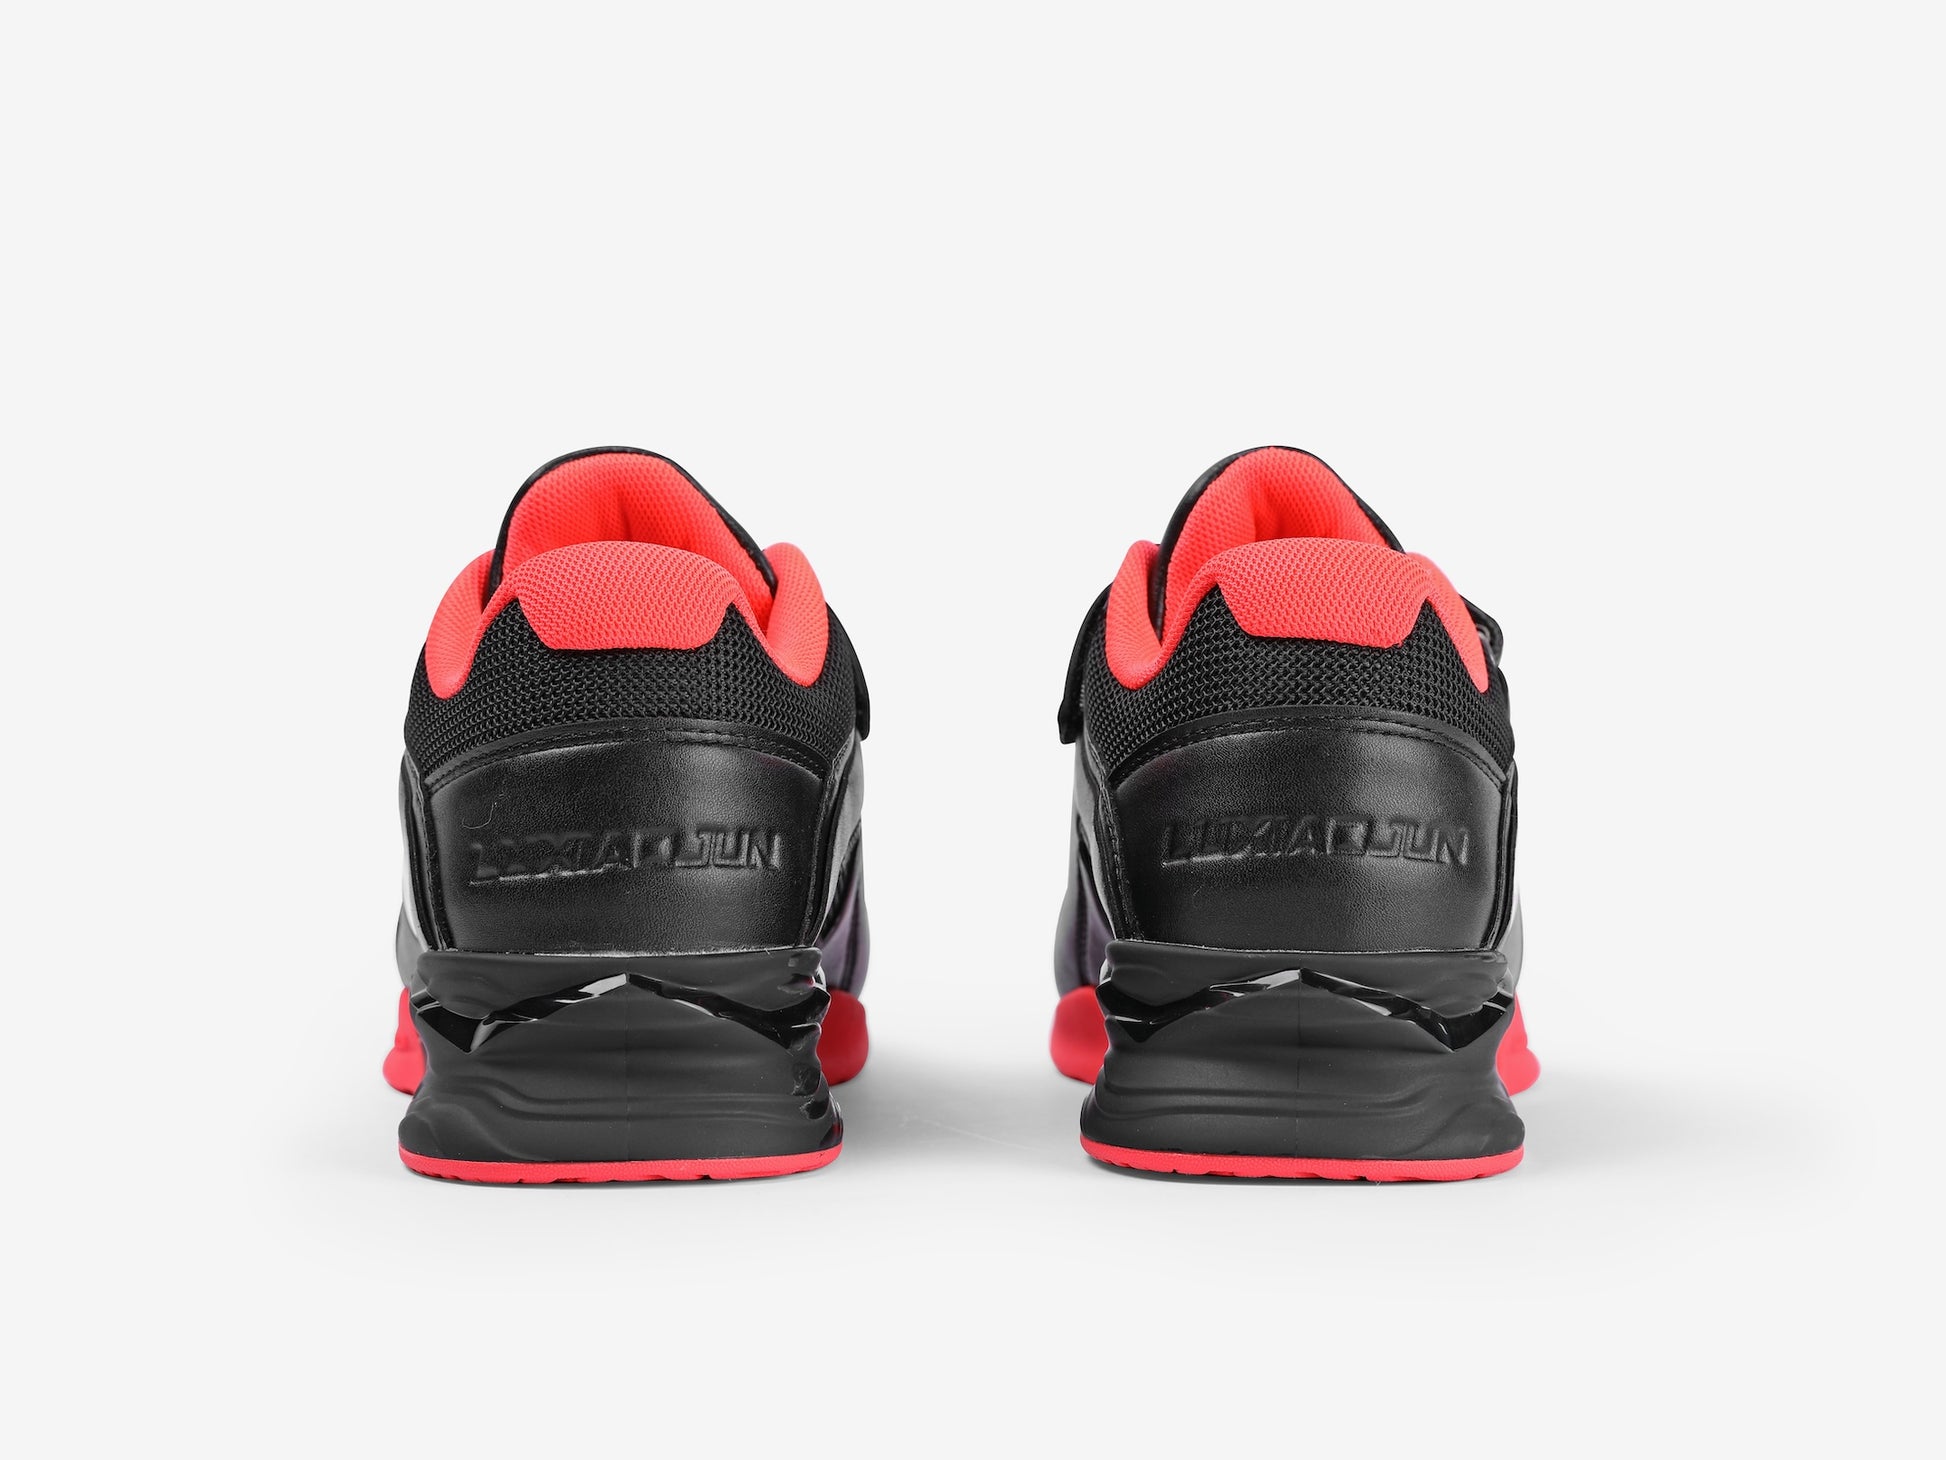 Lu Xiaojun Lifter 1.0 Professional Weightlifting Shoes / Squat Shoes - Black/Red